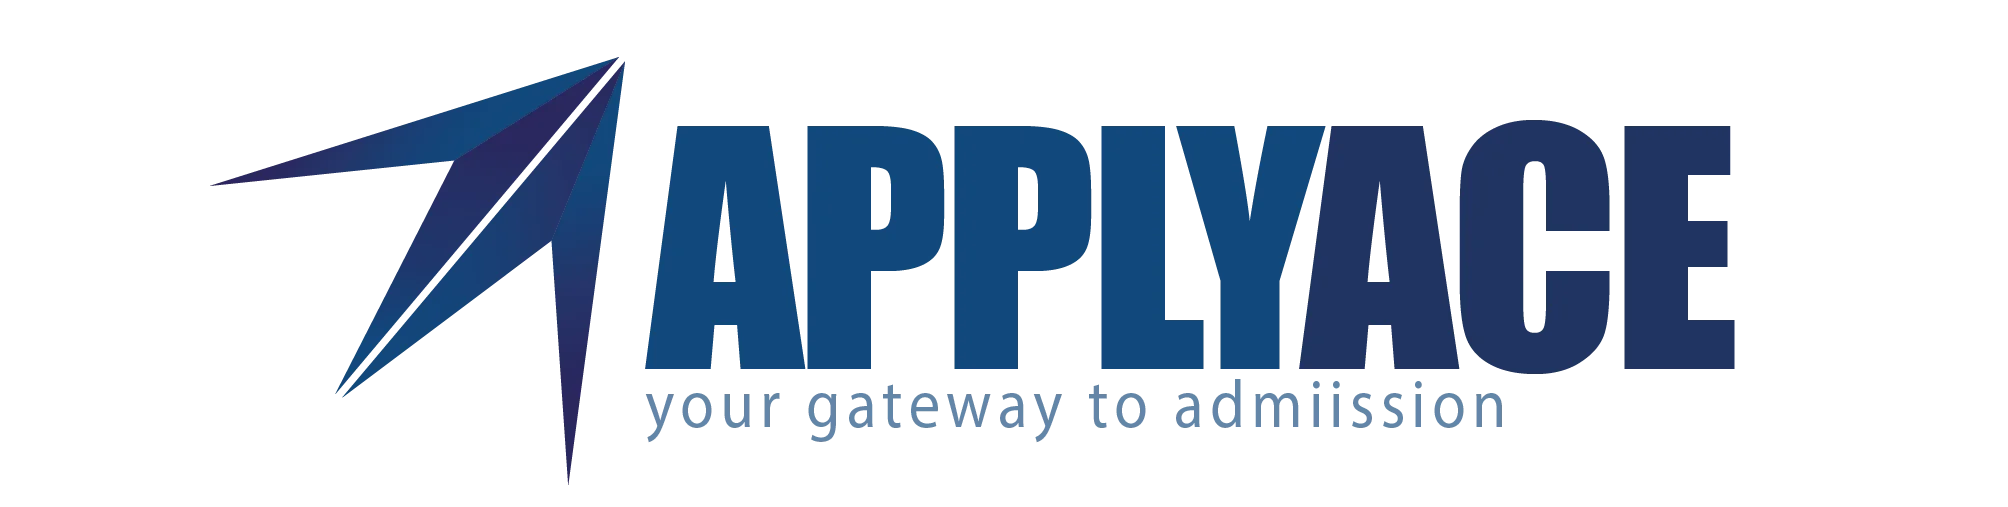 applyace logo